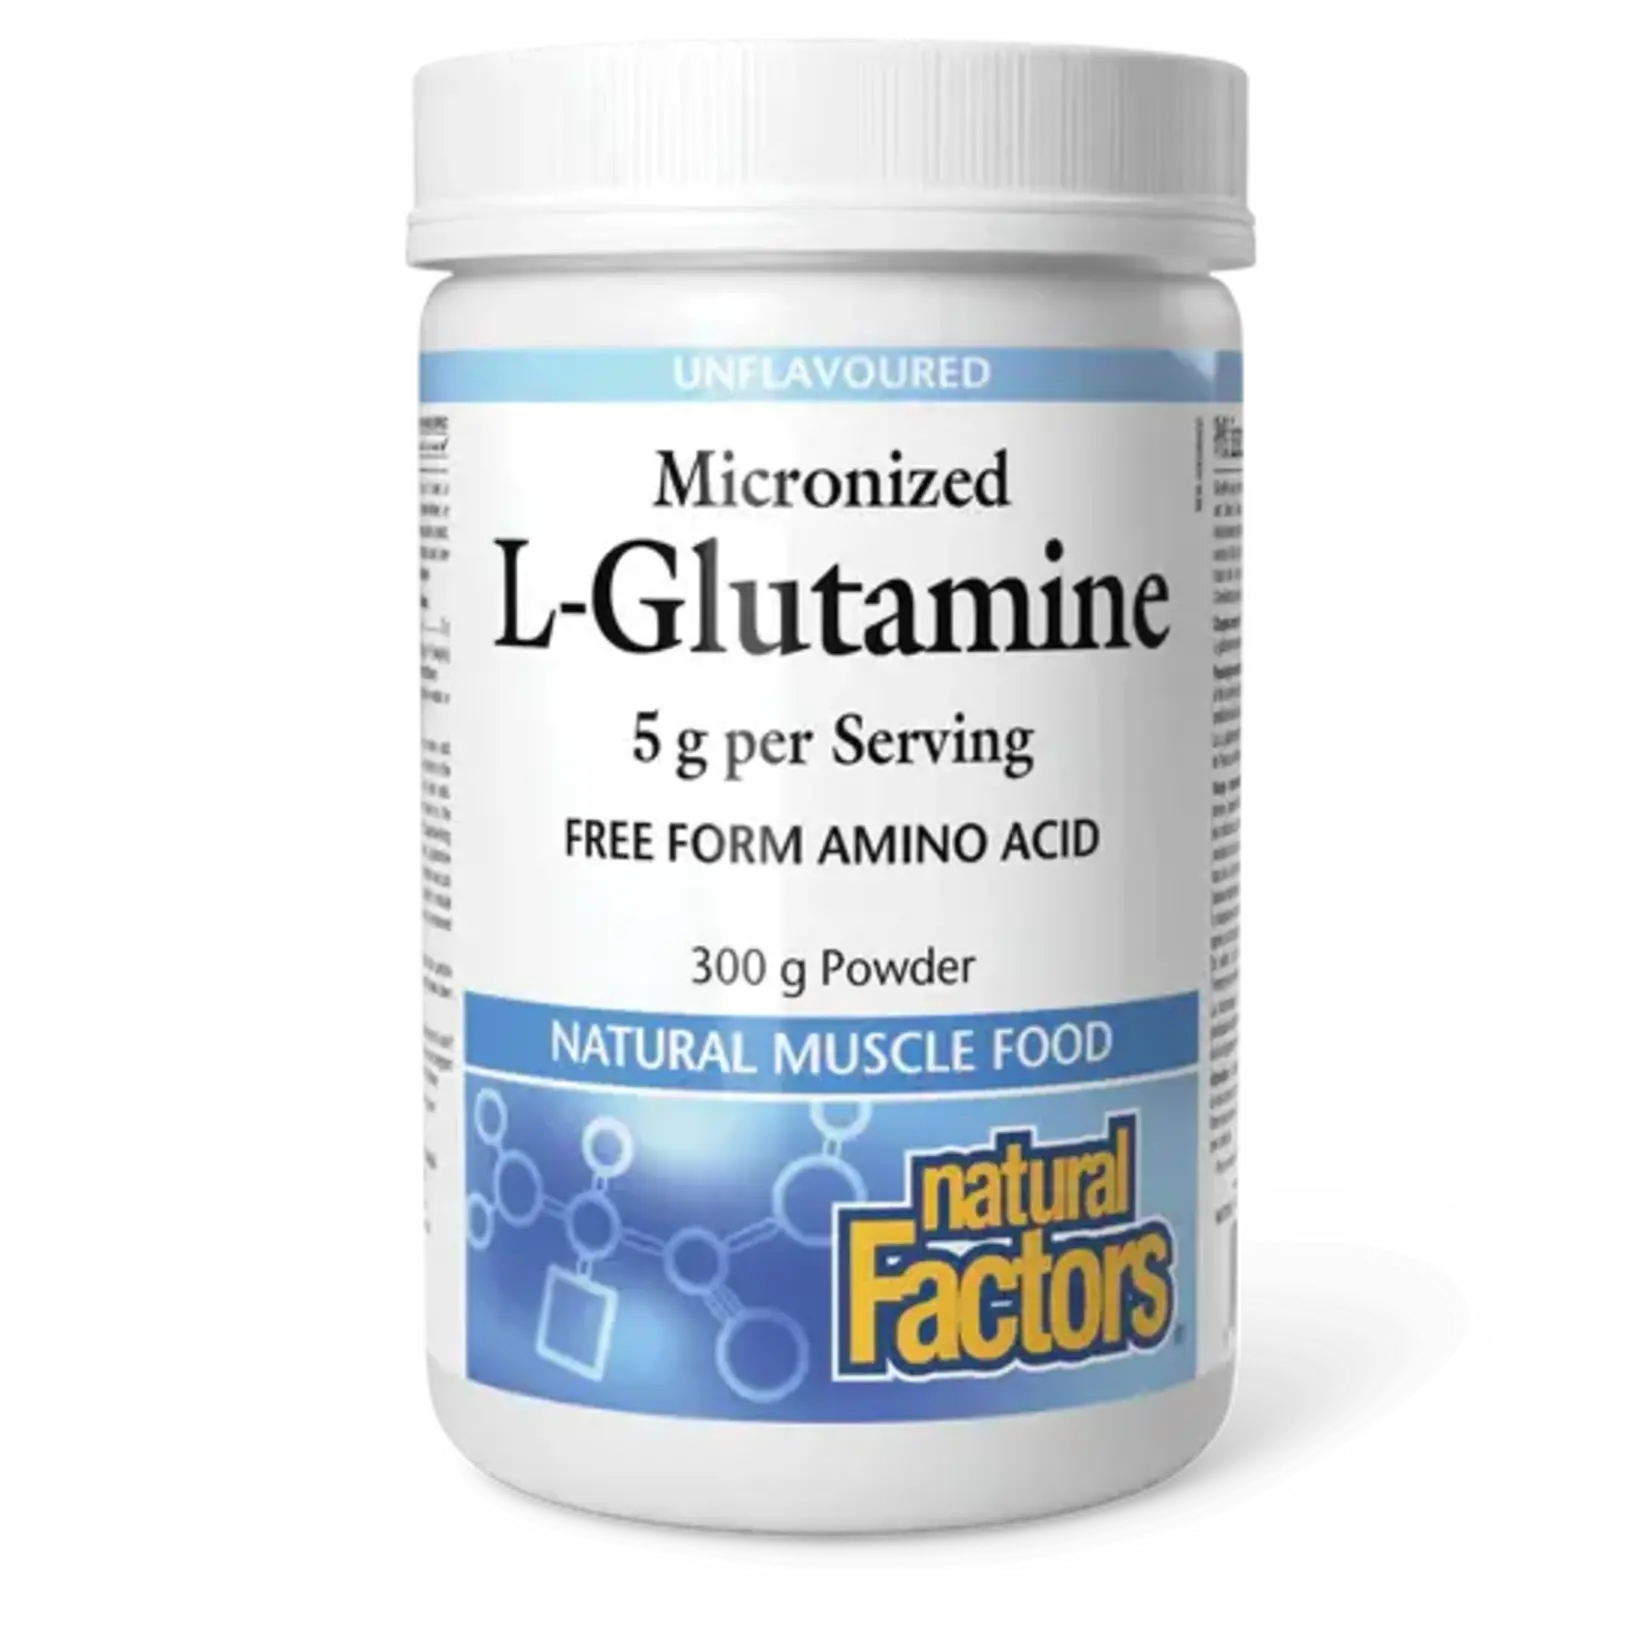 NATURAL FACTORS NATURAL FACTORS L-GLUTAMINE (5G) (MICRONIZED) 300G